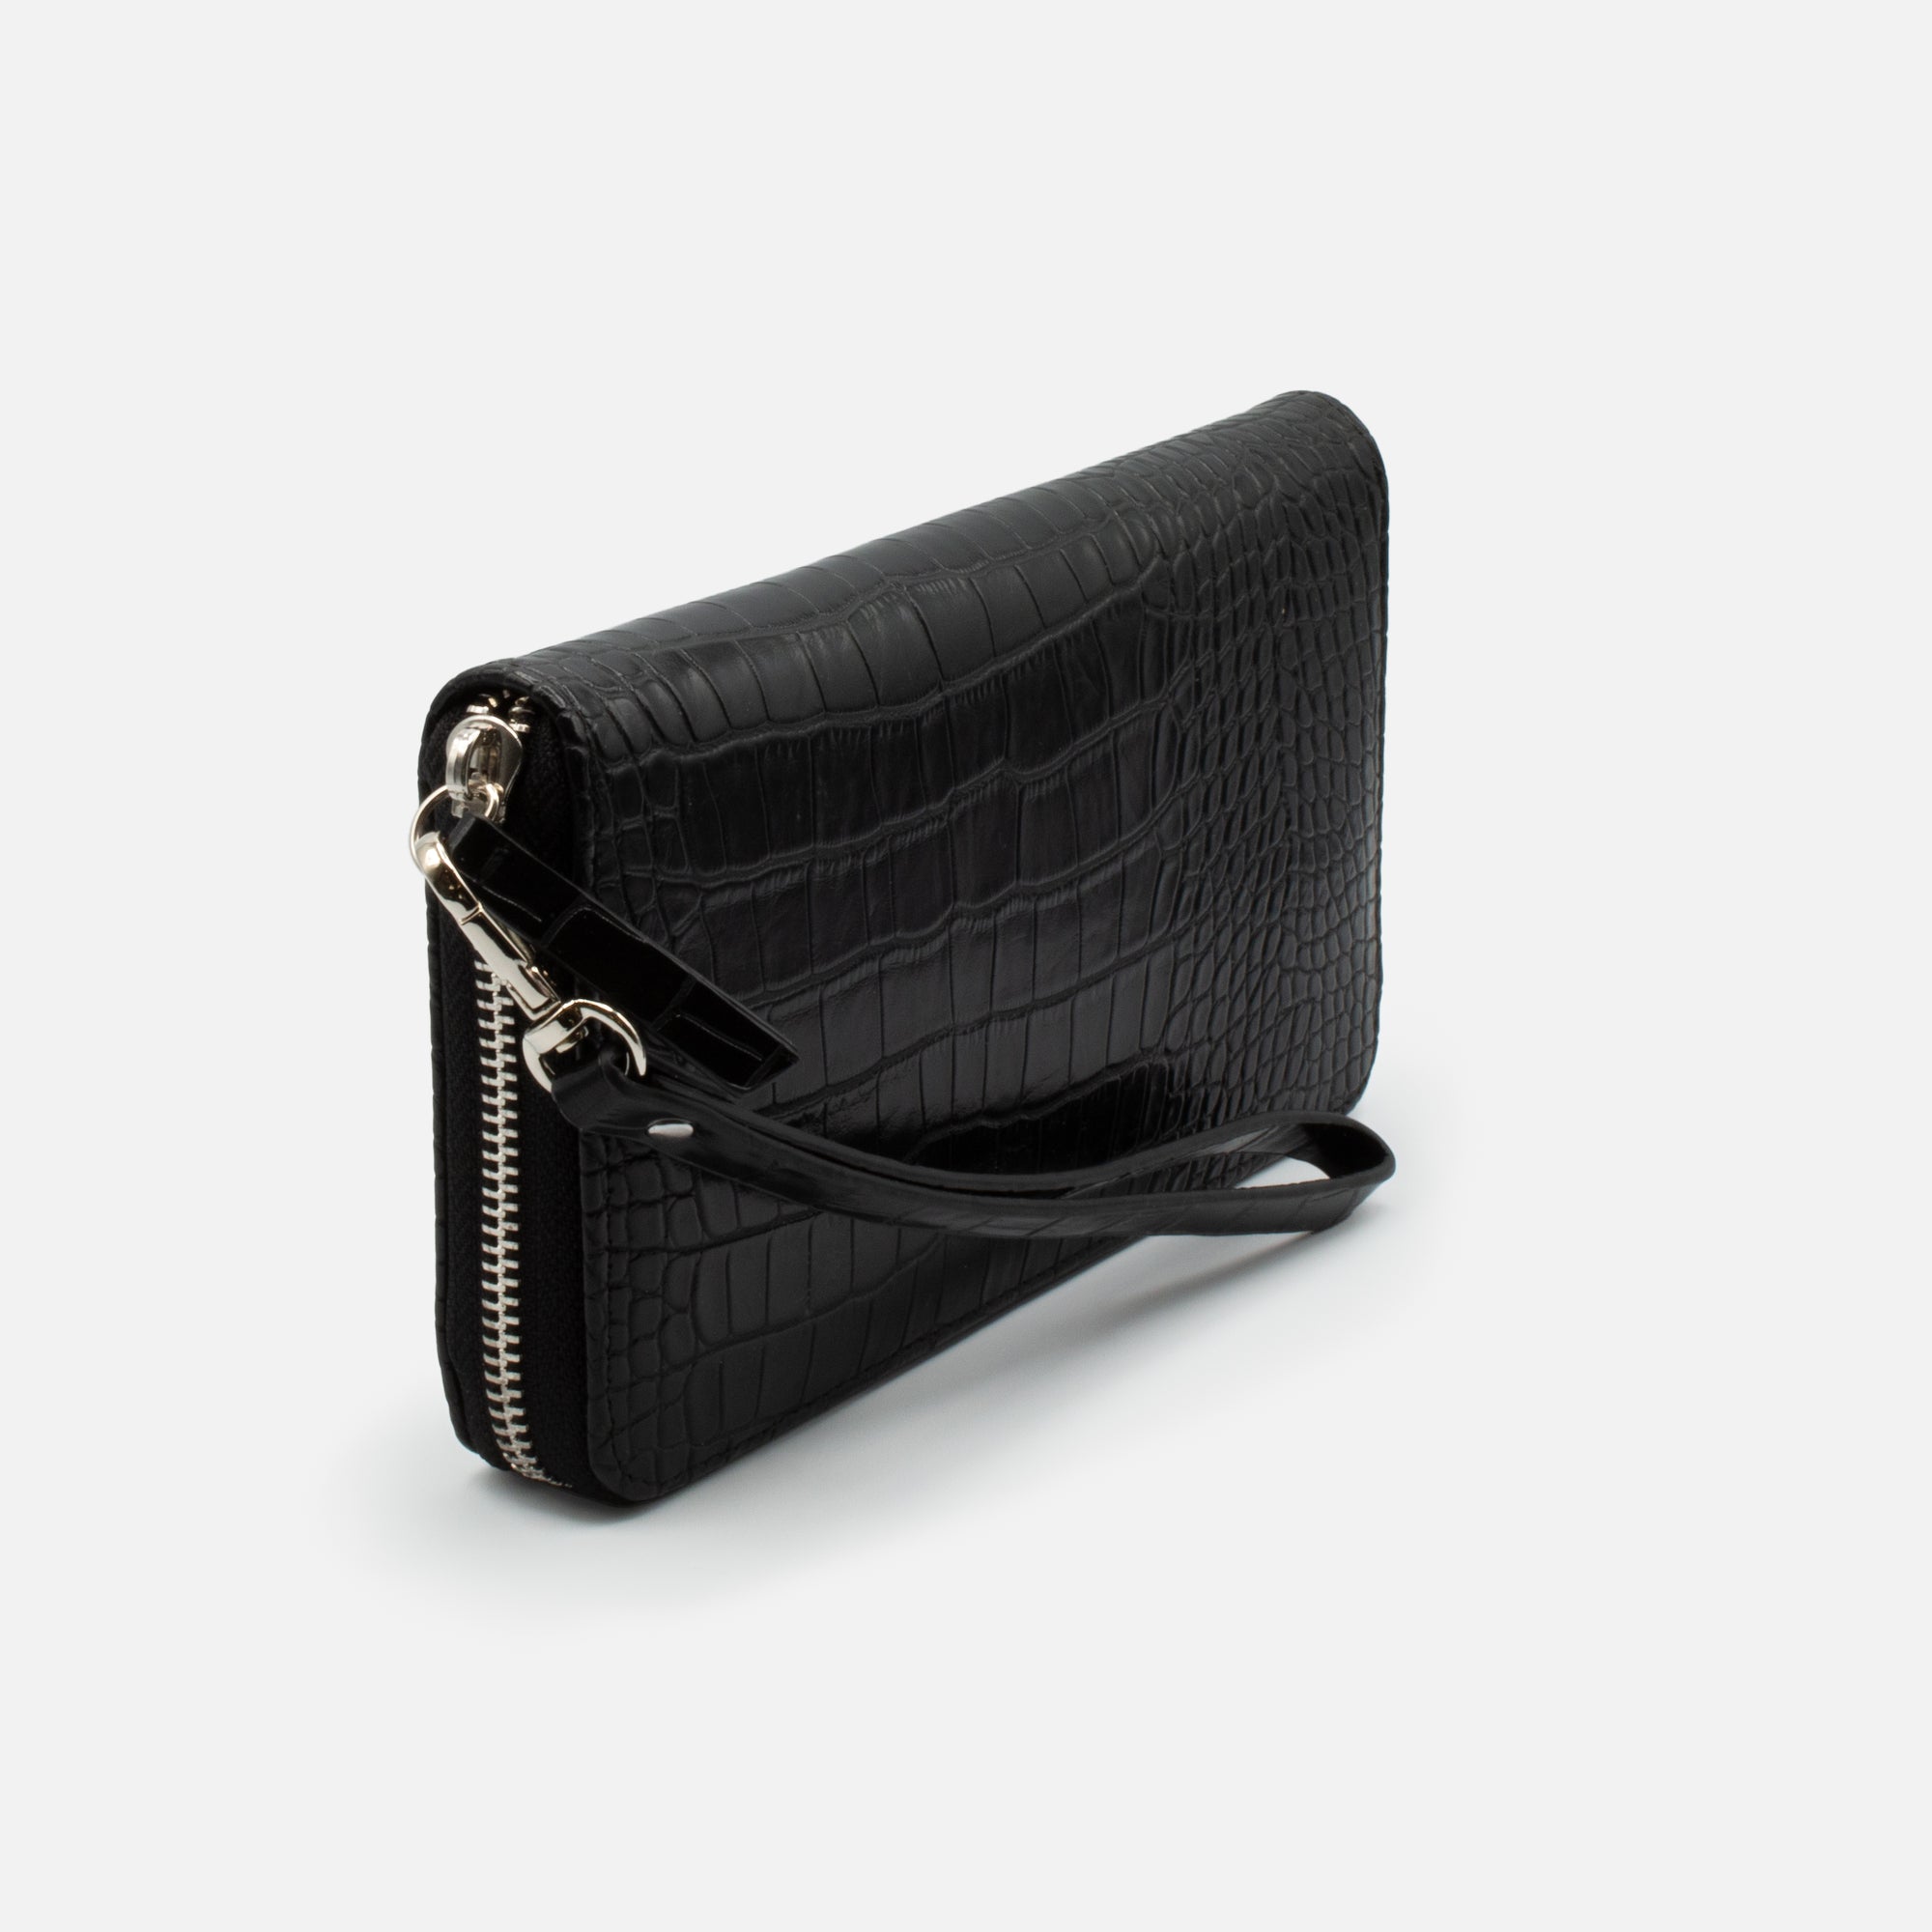 Black crocodile skin pattern wallet with strap